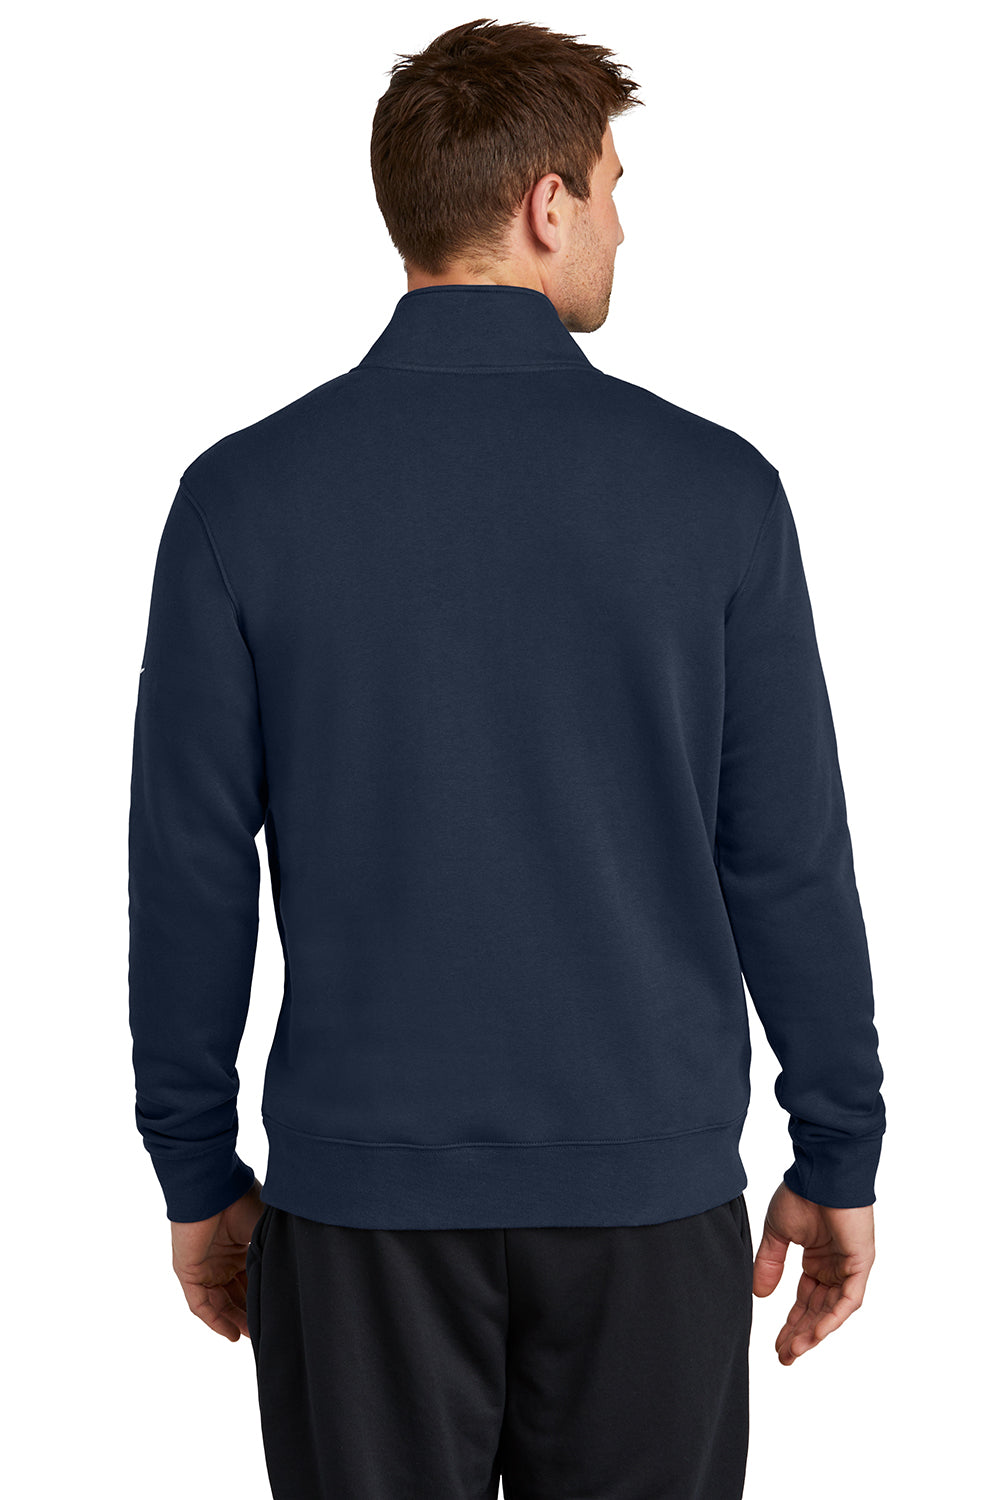 Nike NKDX6718 Mens Club Fleece 1/4 Zip Sweatshirt Midnight Navy Blue Model Back